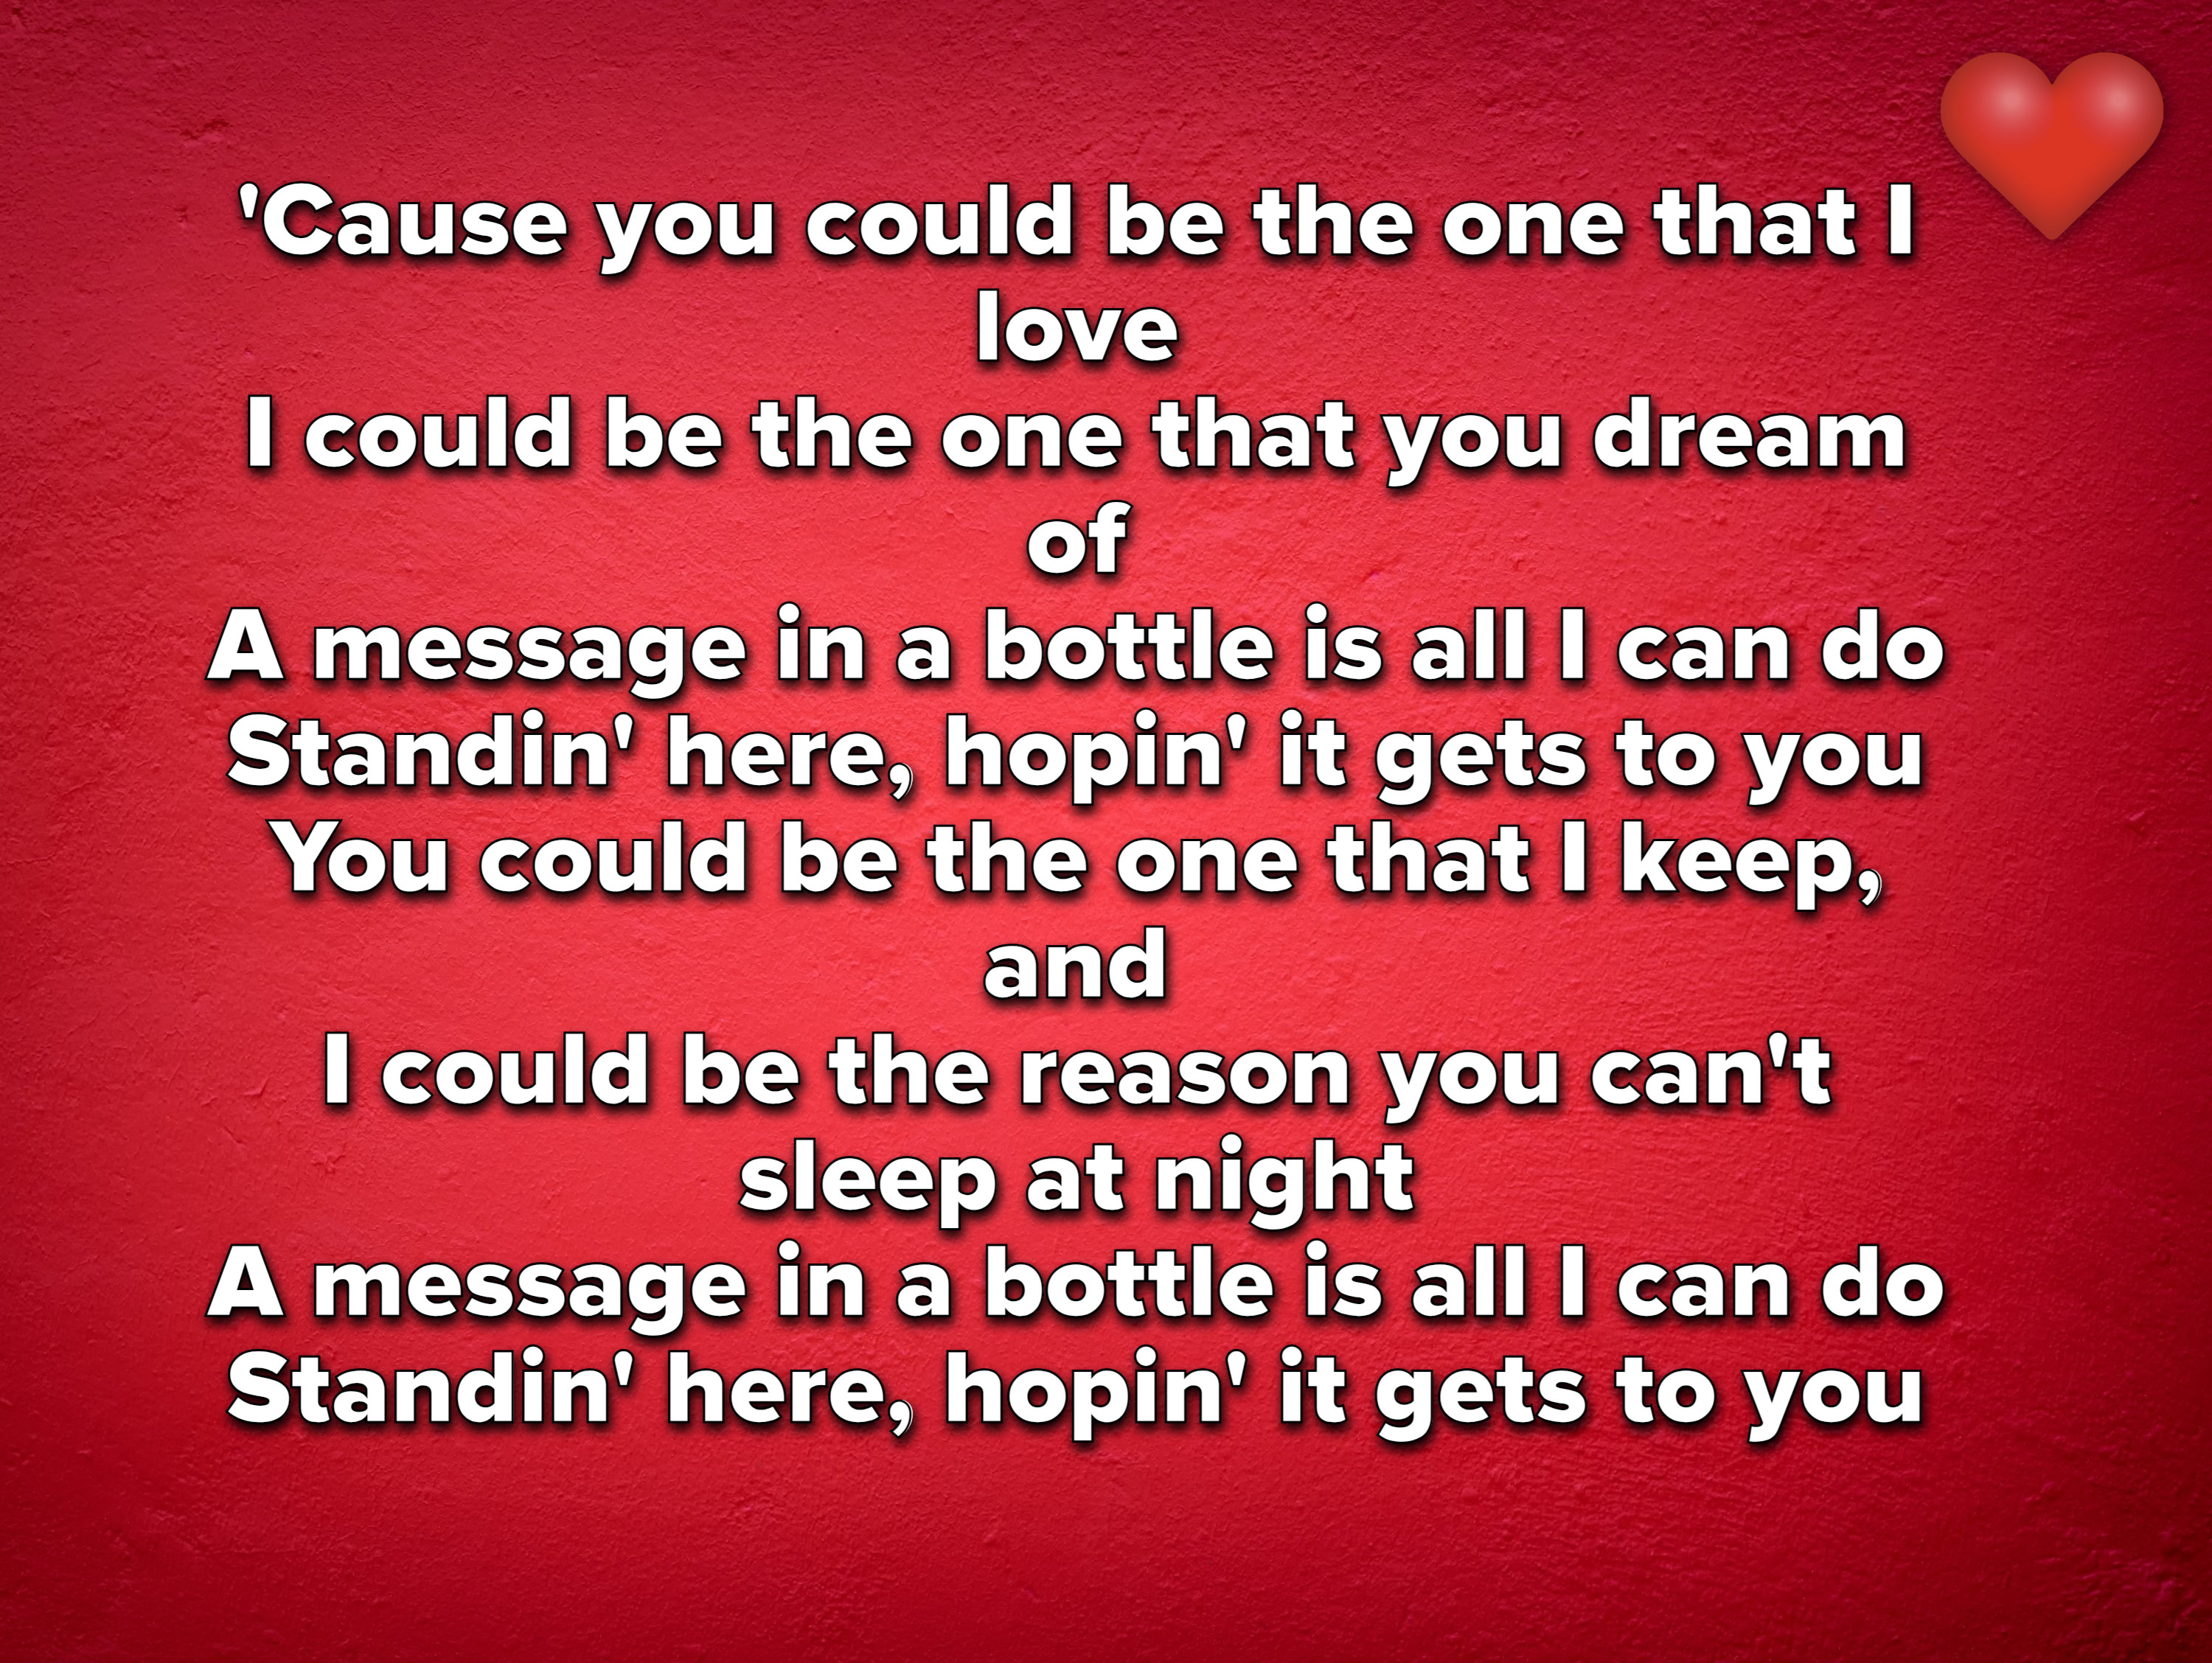 Bottle lyrics in a message Message in